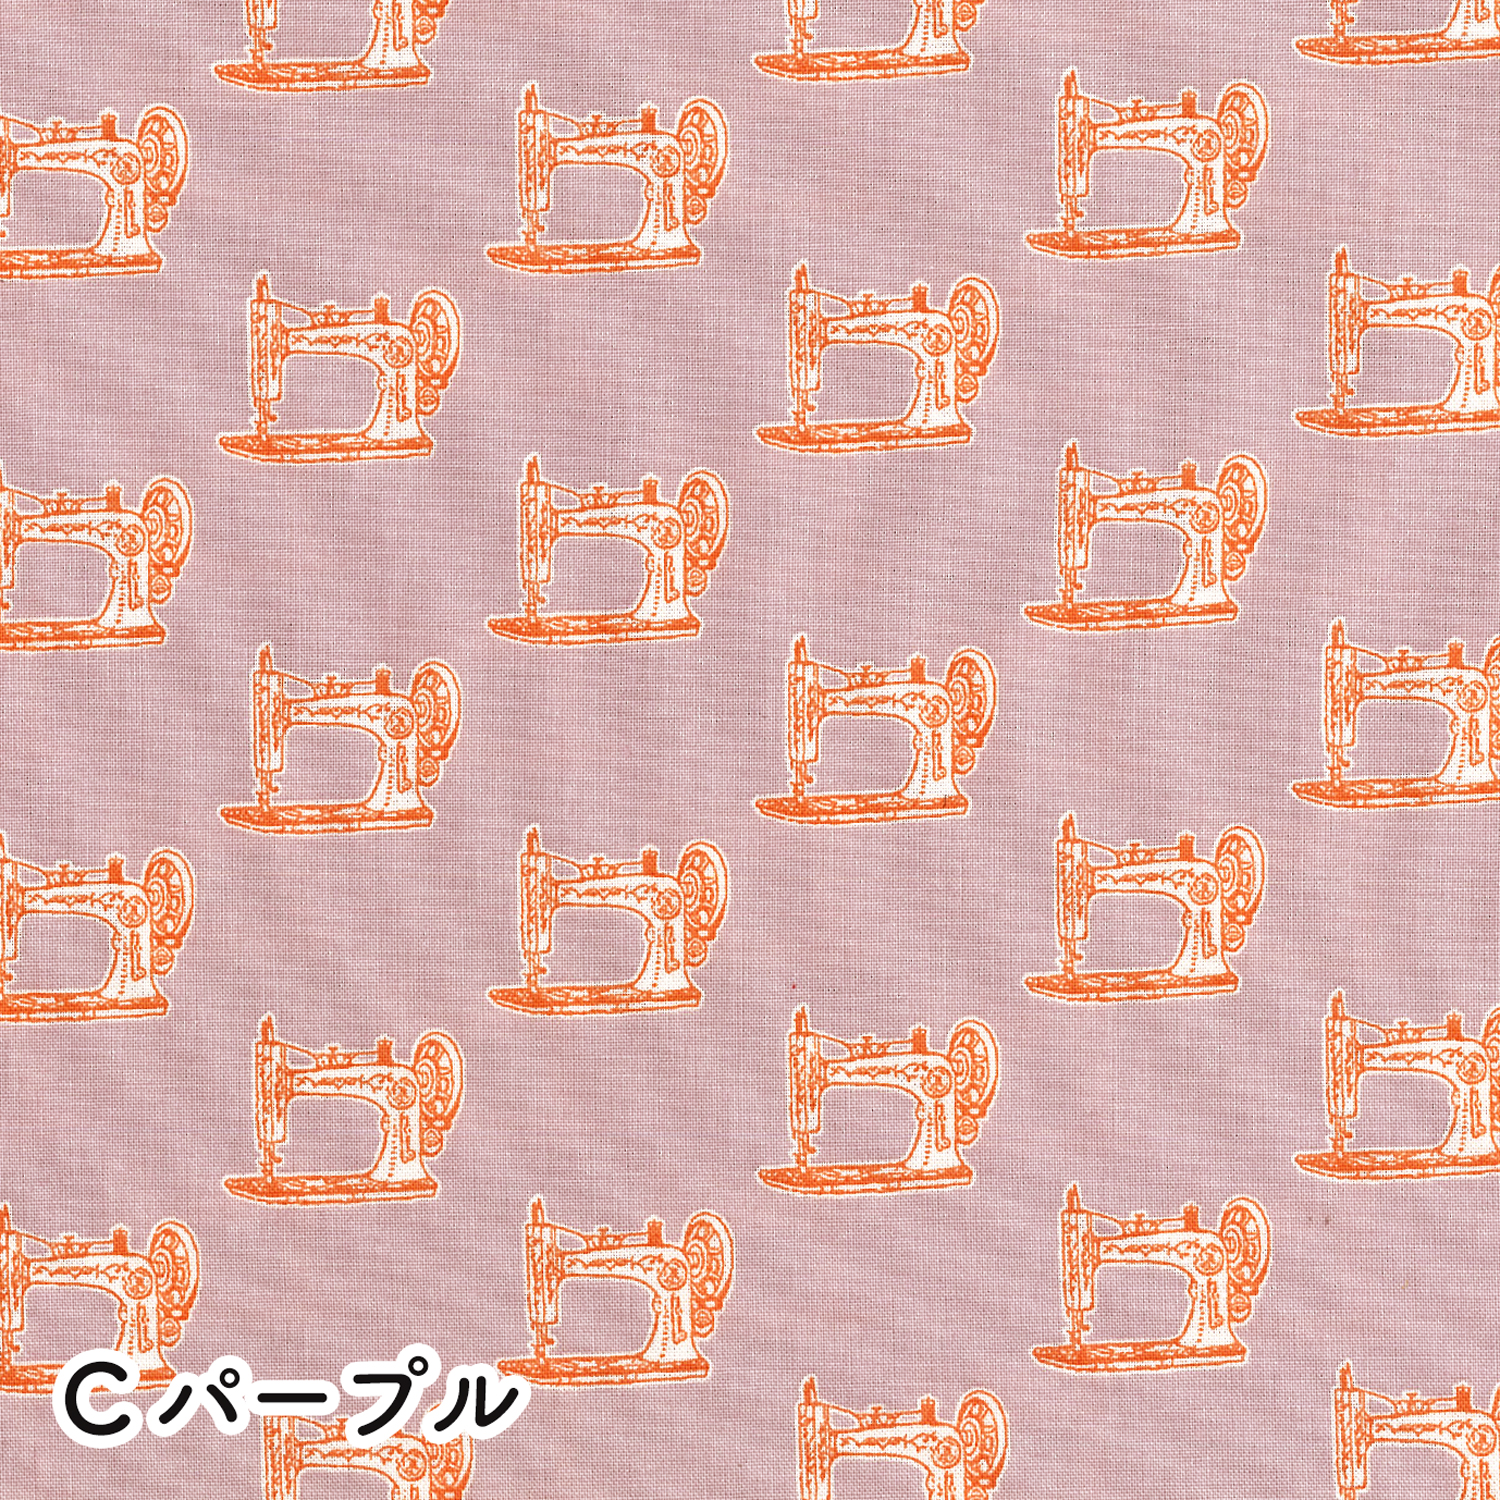 【原反特価】■PR202R-C Maison de Fabric -PARIS- ミシン 巾約110cm 原反 (巻)